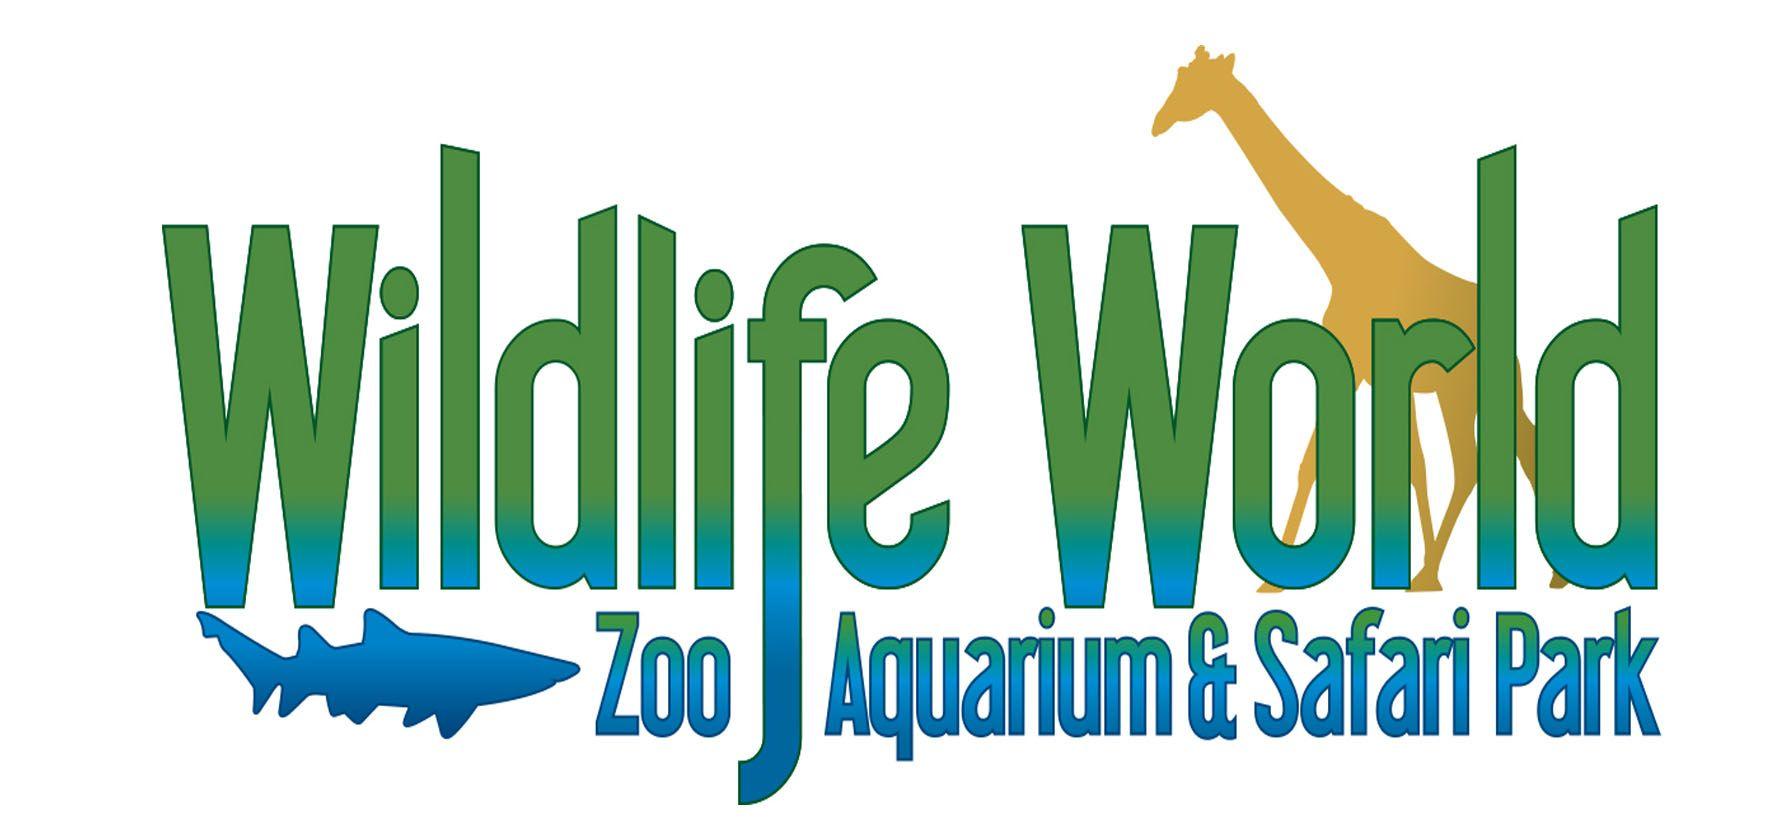 Wildlife Safari Logo - Home - Wildlife World